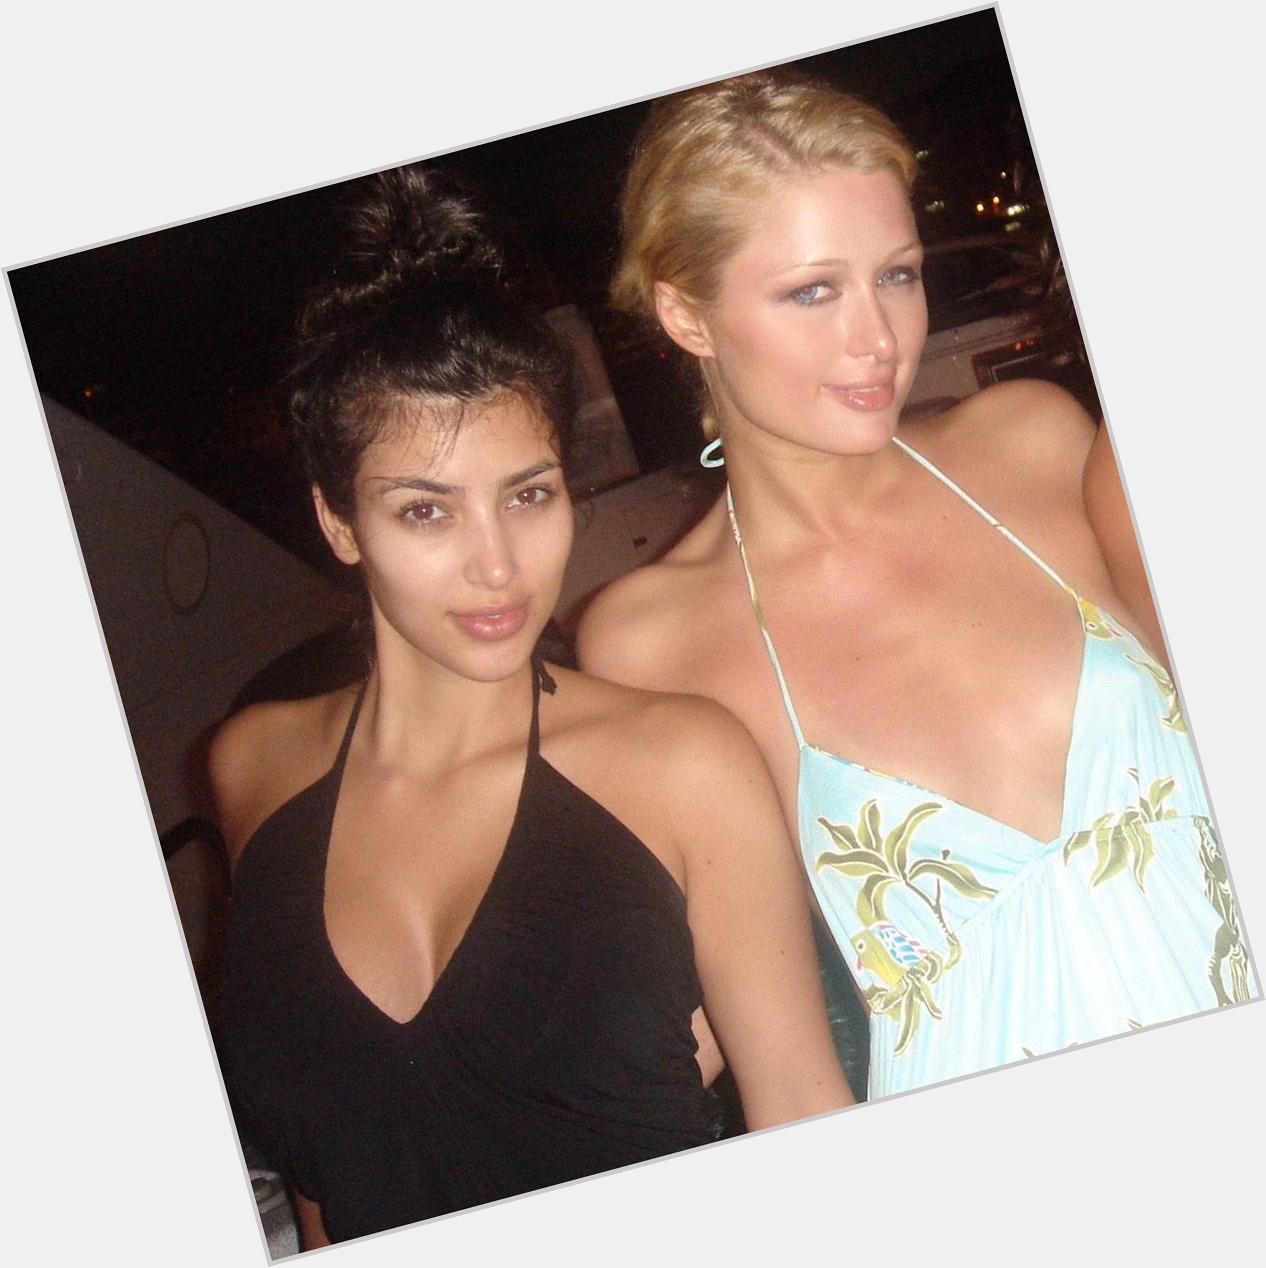   Happy belated birthday fun fact: Kim used to be Paris Hilton\s maid...bye